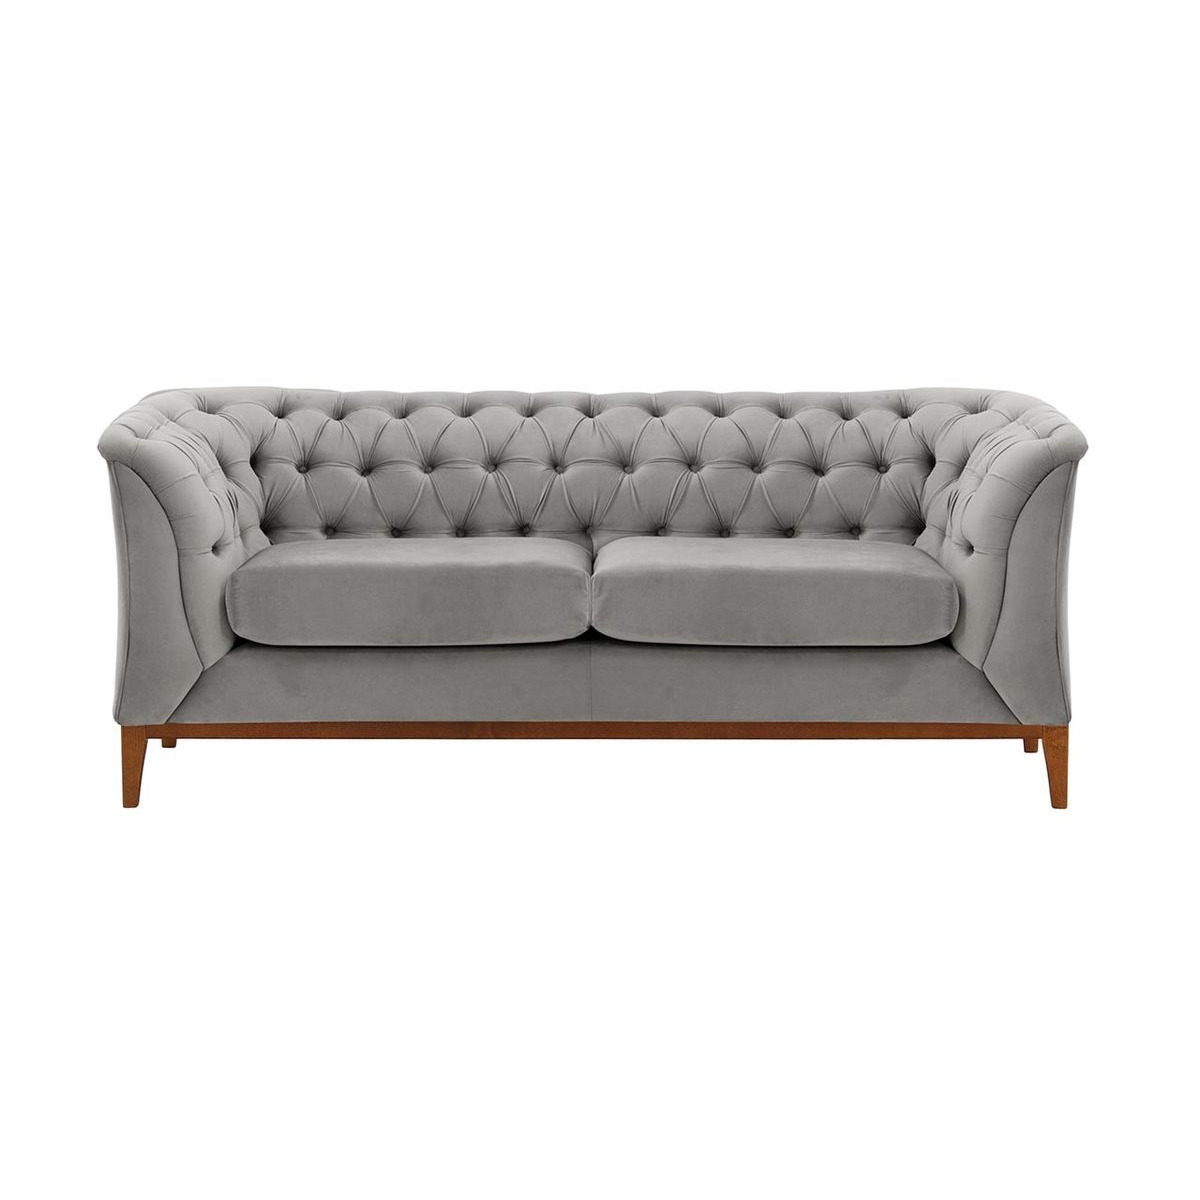 Chesterfield Modern 2 Seater Sofa Wood, silver, Leg colour: aveo - image 1